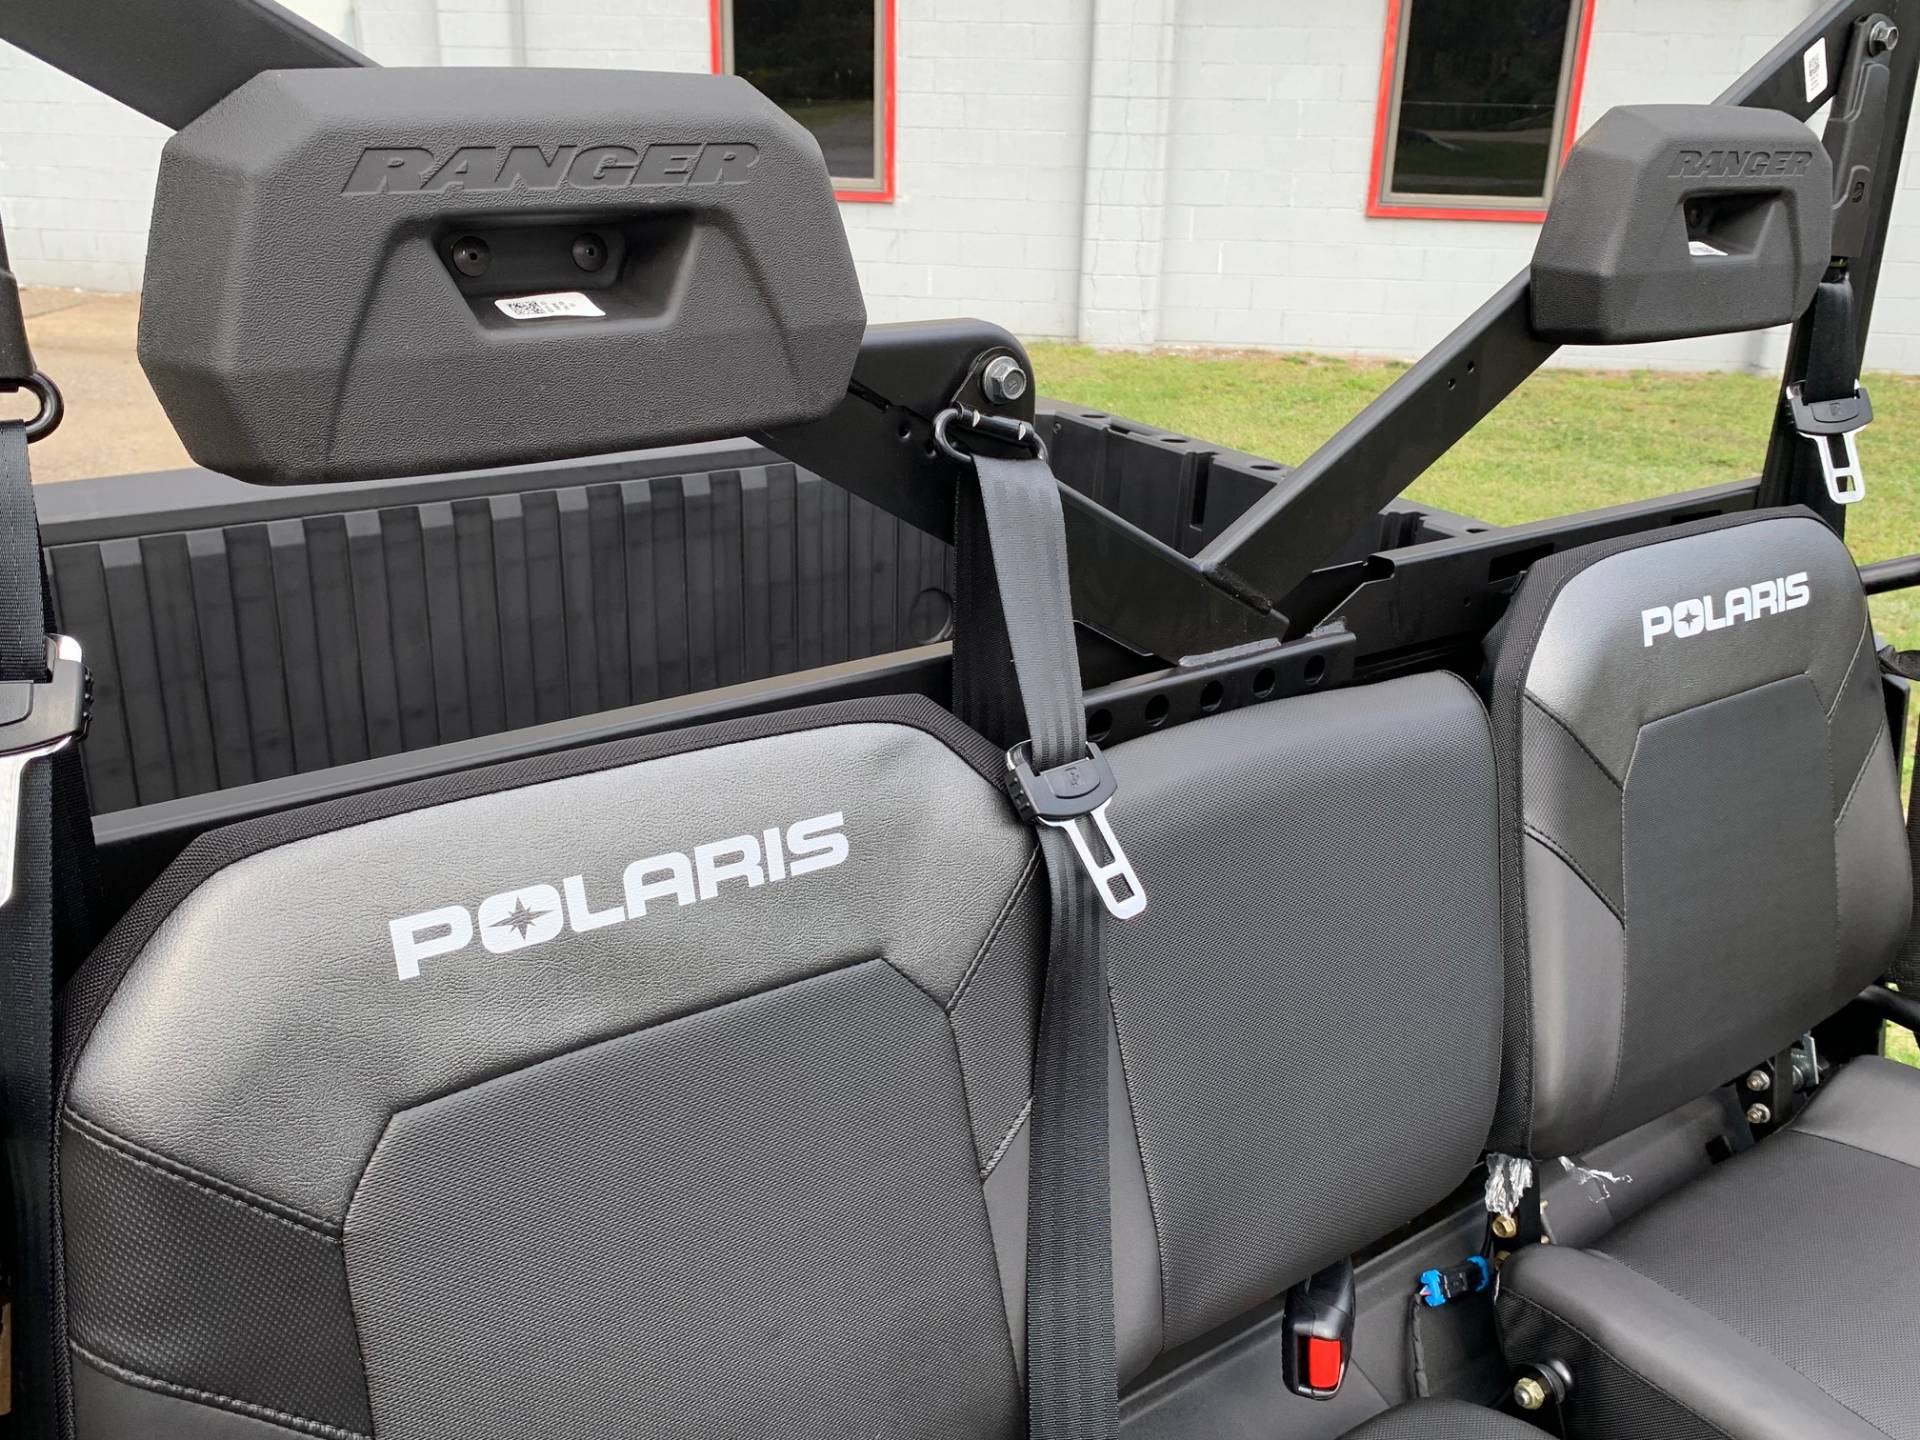 2021 Polaris Ranger Xp 1000 Premium Utility Vehicles Brilliant Ohio Call Josh Gardner 740 296 9653 - 2021 Polaris Ranger Xp 1000 Crew Seat Covers